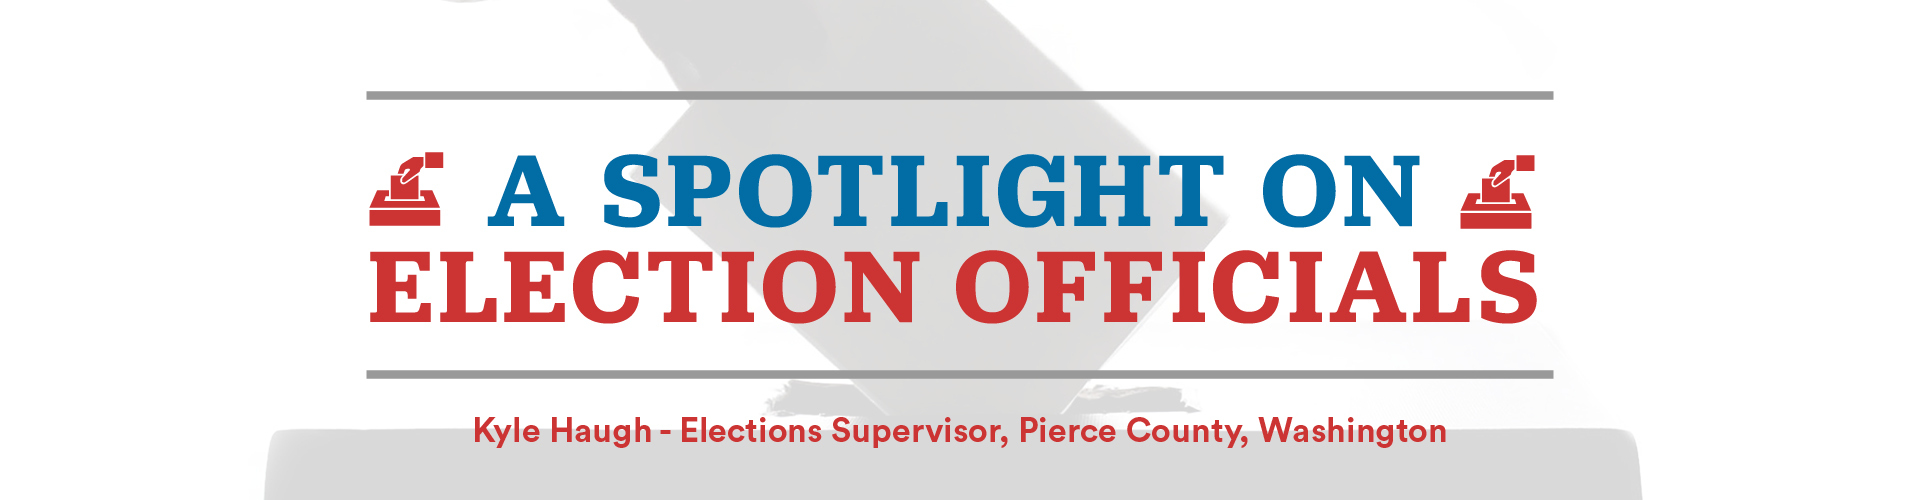 A spotlight on election officials - Kyle Haugh